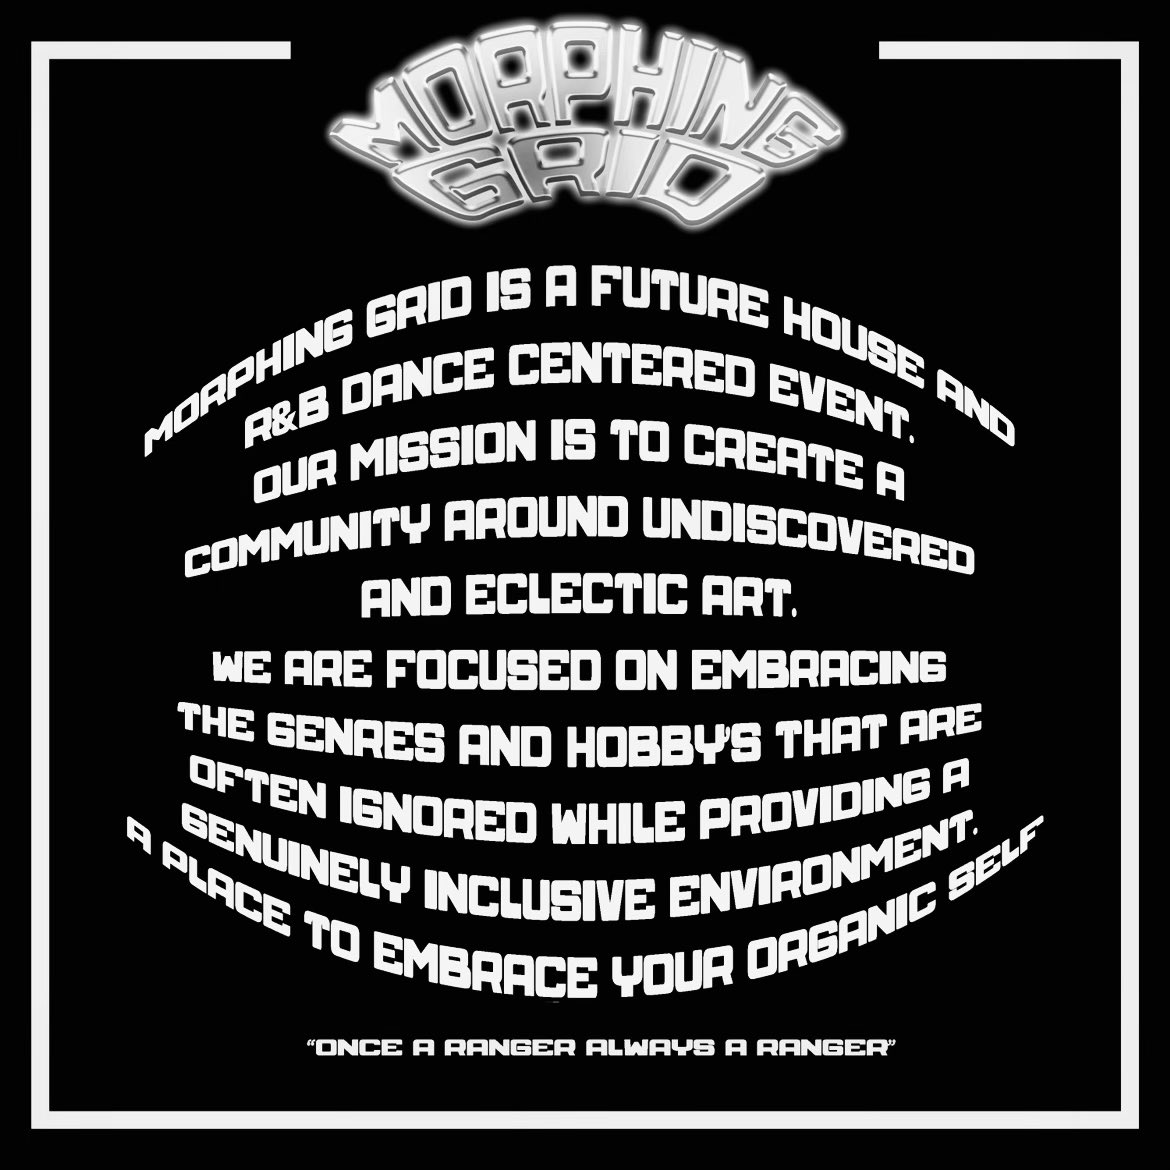 🌍 ⚡️MORPHING GRID ⚡️🌍
(ᖴᑌTᑌᖇE ᕼOᑌᔕE/ ᖇ&ᗷ EᐯEᑎT)

APRIL.12TH 9PM-1AM 👾
(120 W NORTH AVE, BALTIMORE ,MD)⚡️
($10 ATD 21+) 👾

#MotorHouseBaltimore #BaltimoreDJ #DJSet #BaltimoreEvent  #FutureHouse #MorphingGrid #MorphingGridRadio #MARYLAND #TheALCombo #DJEvent